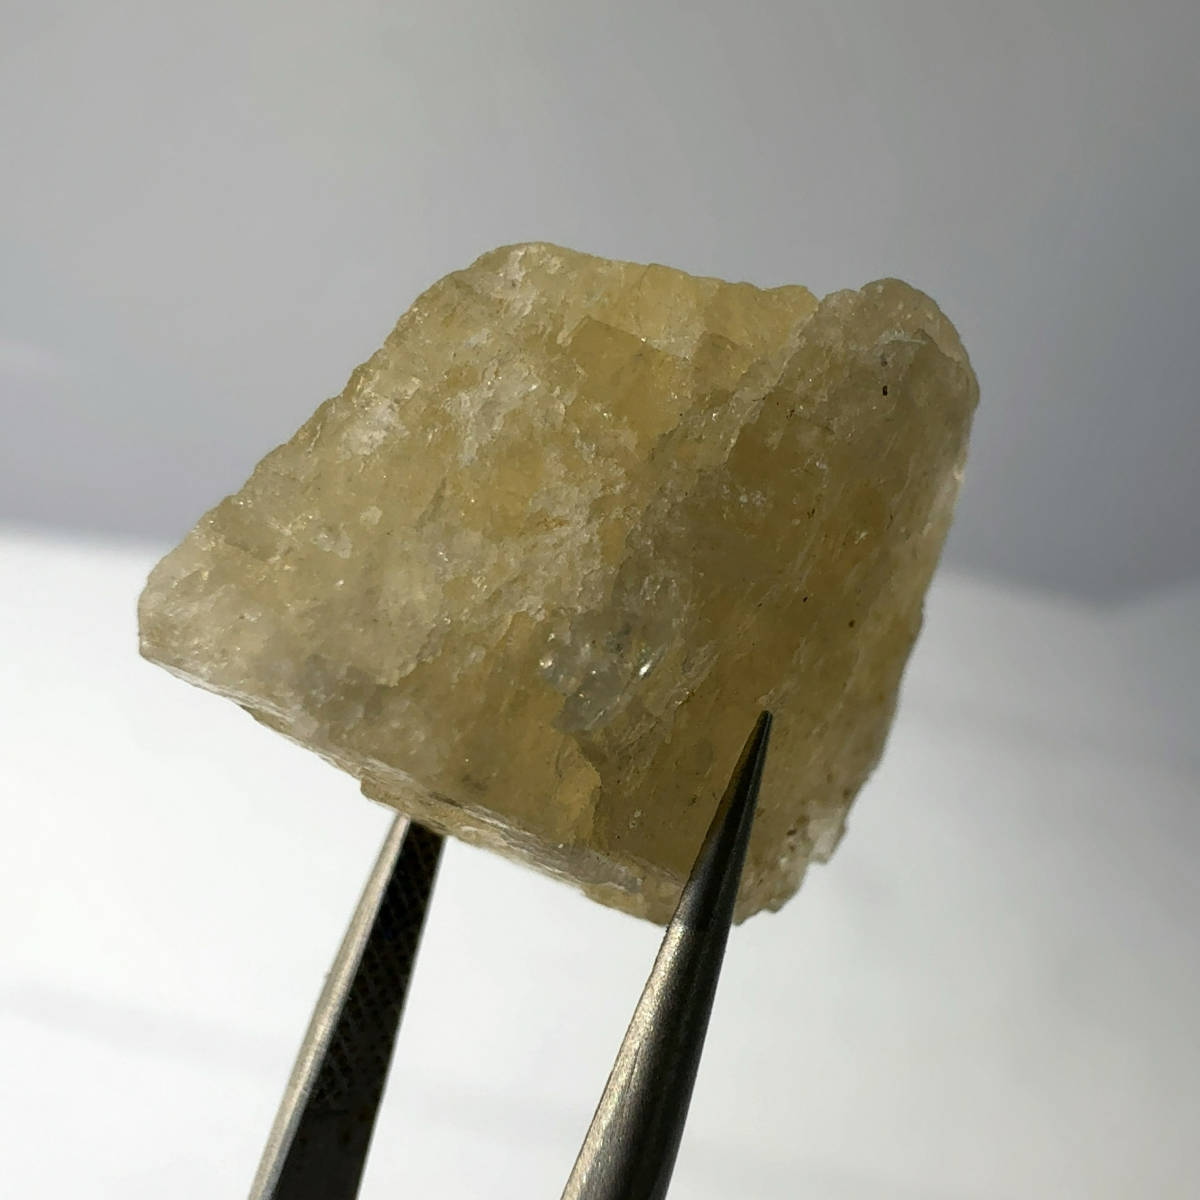 【E23772】 アンブリゴナイト アンブリゴ石 天然石 原石 鉱物 パワーストーン_画像3